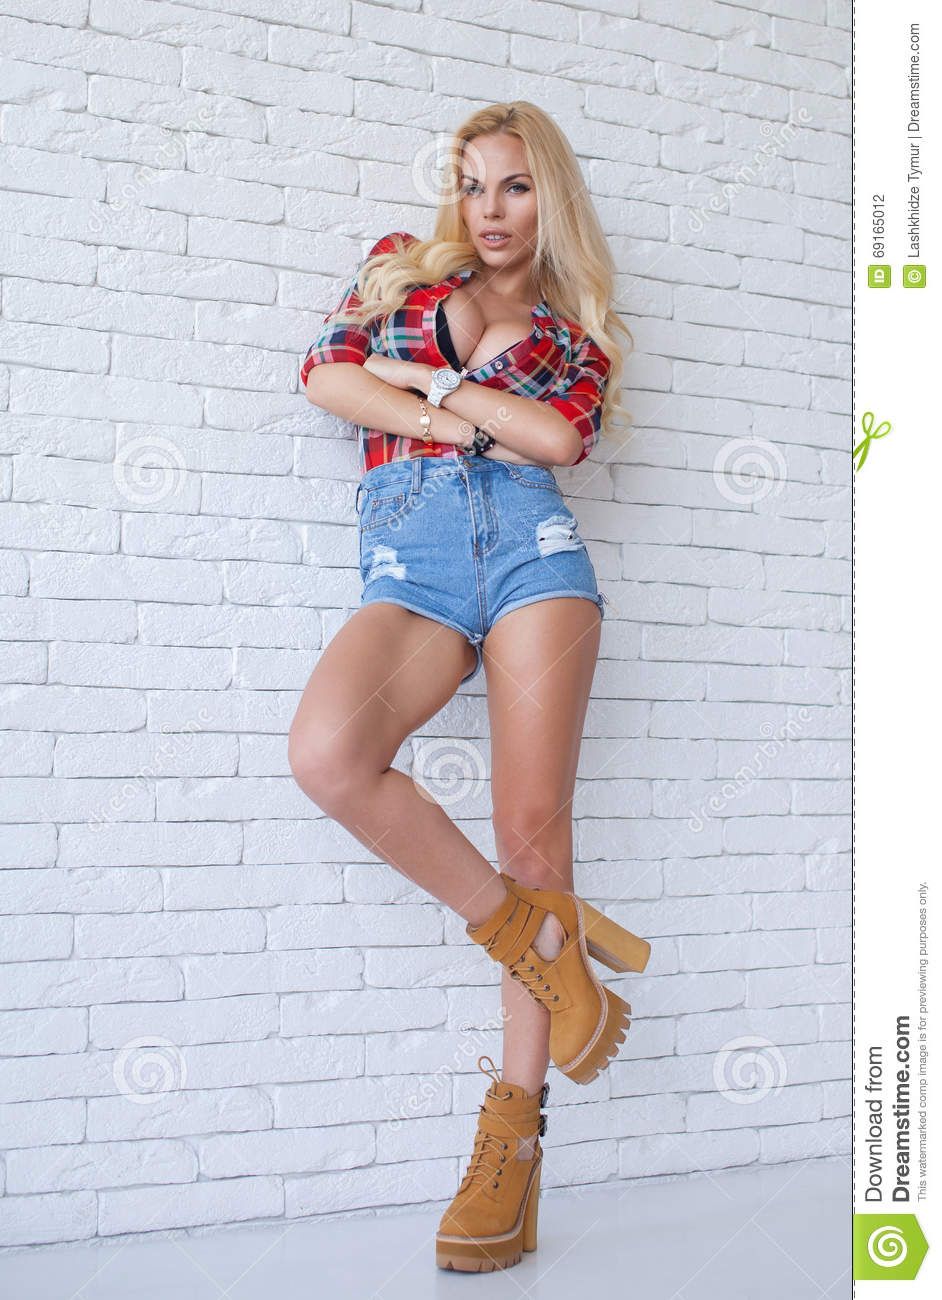 Nice ass sexy blonde girl